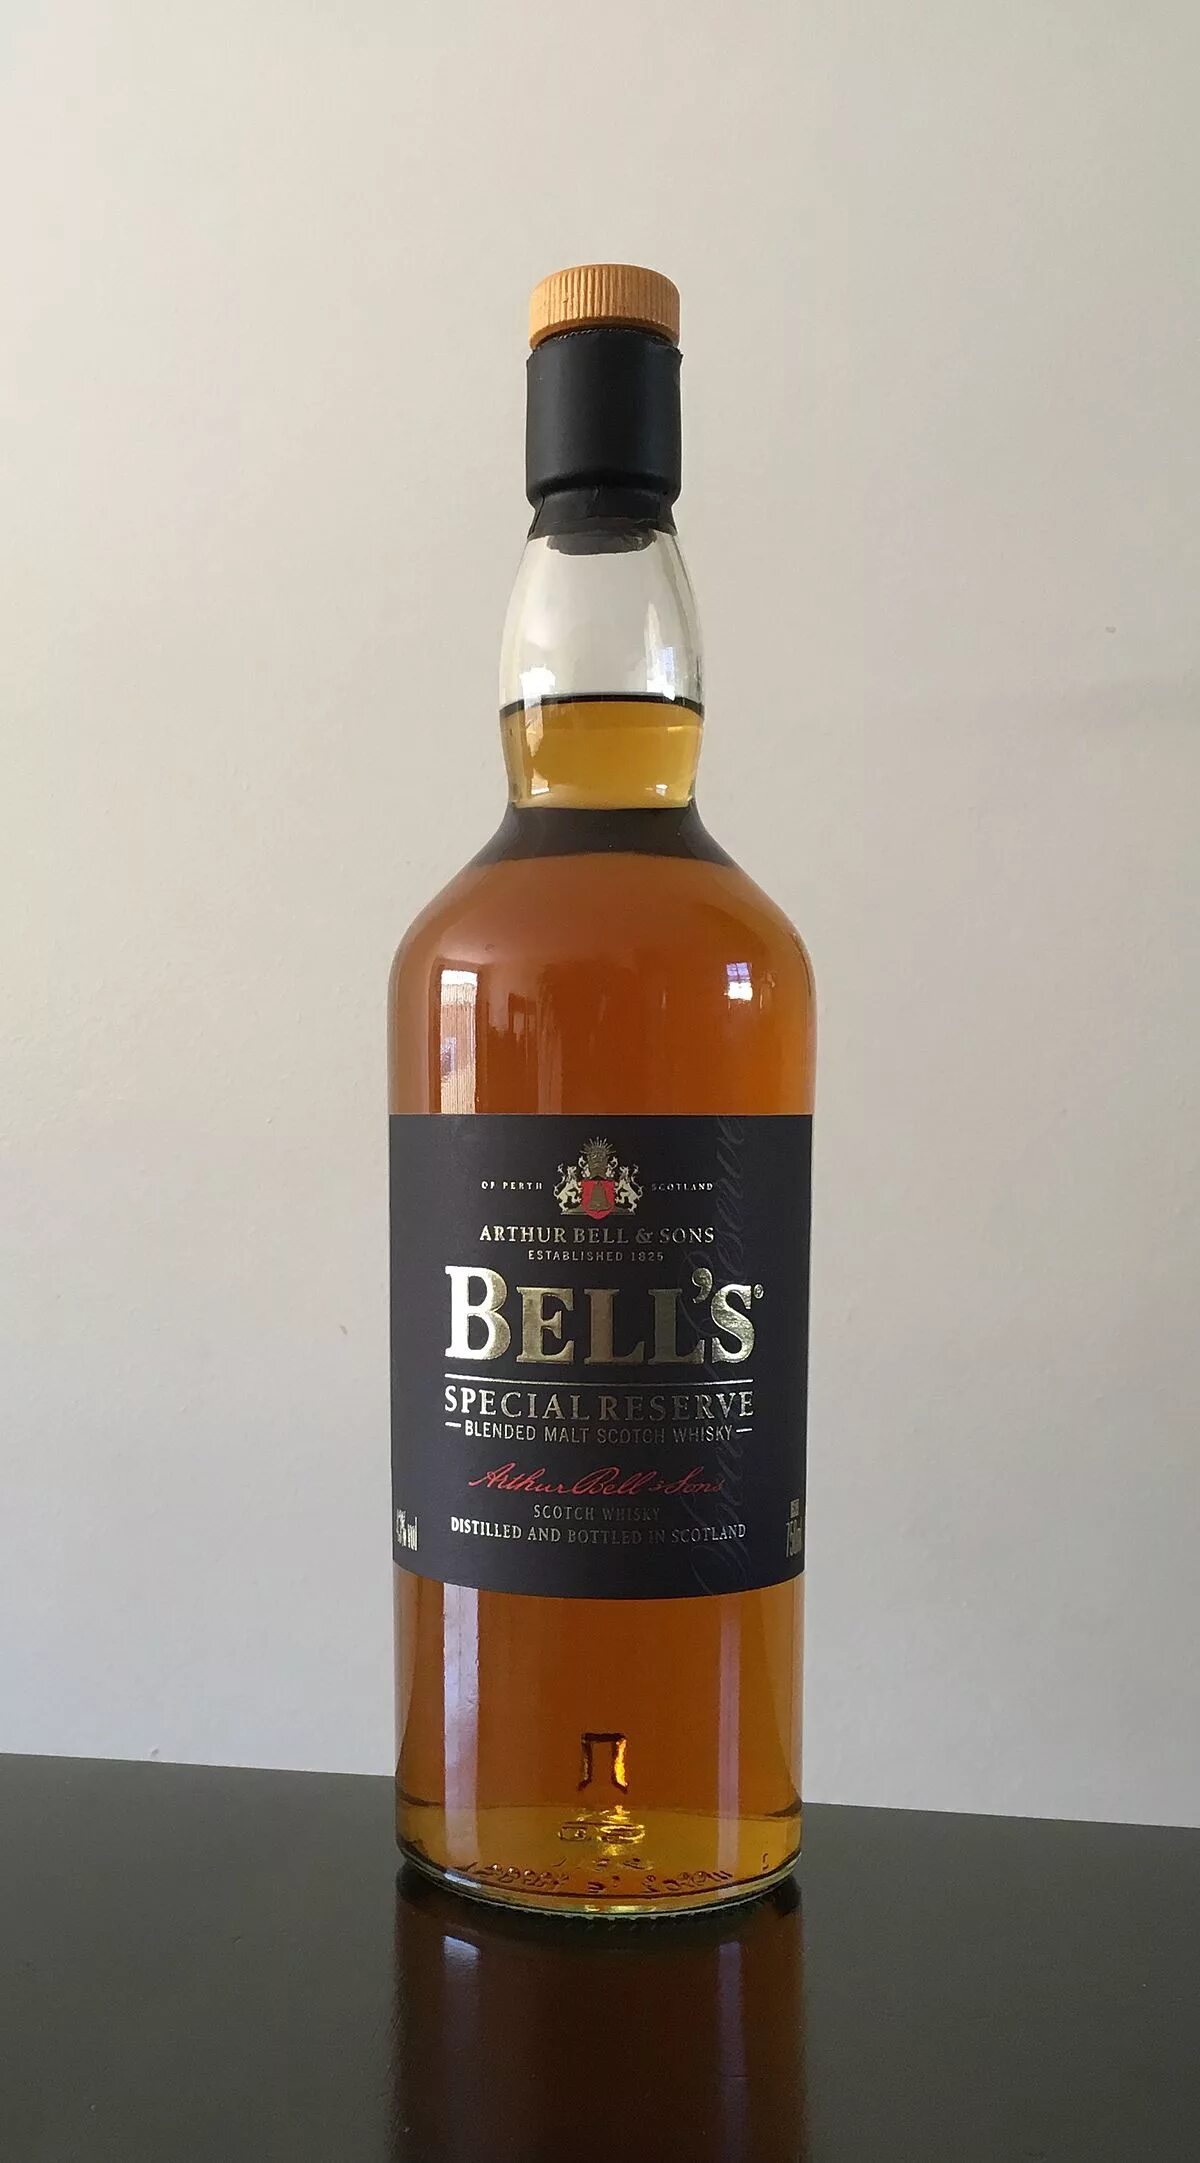 Bells whisky. Bells виски. Виски Беллисон. Bell's Original Blended Scotch.